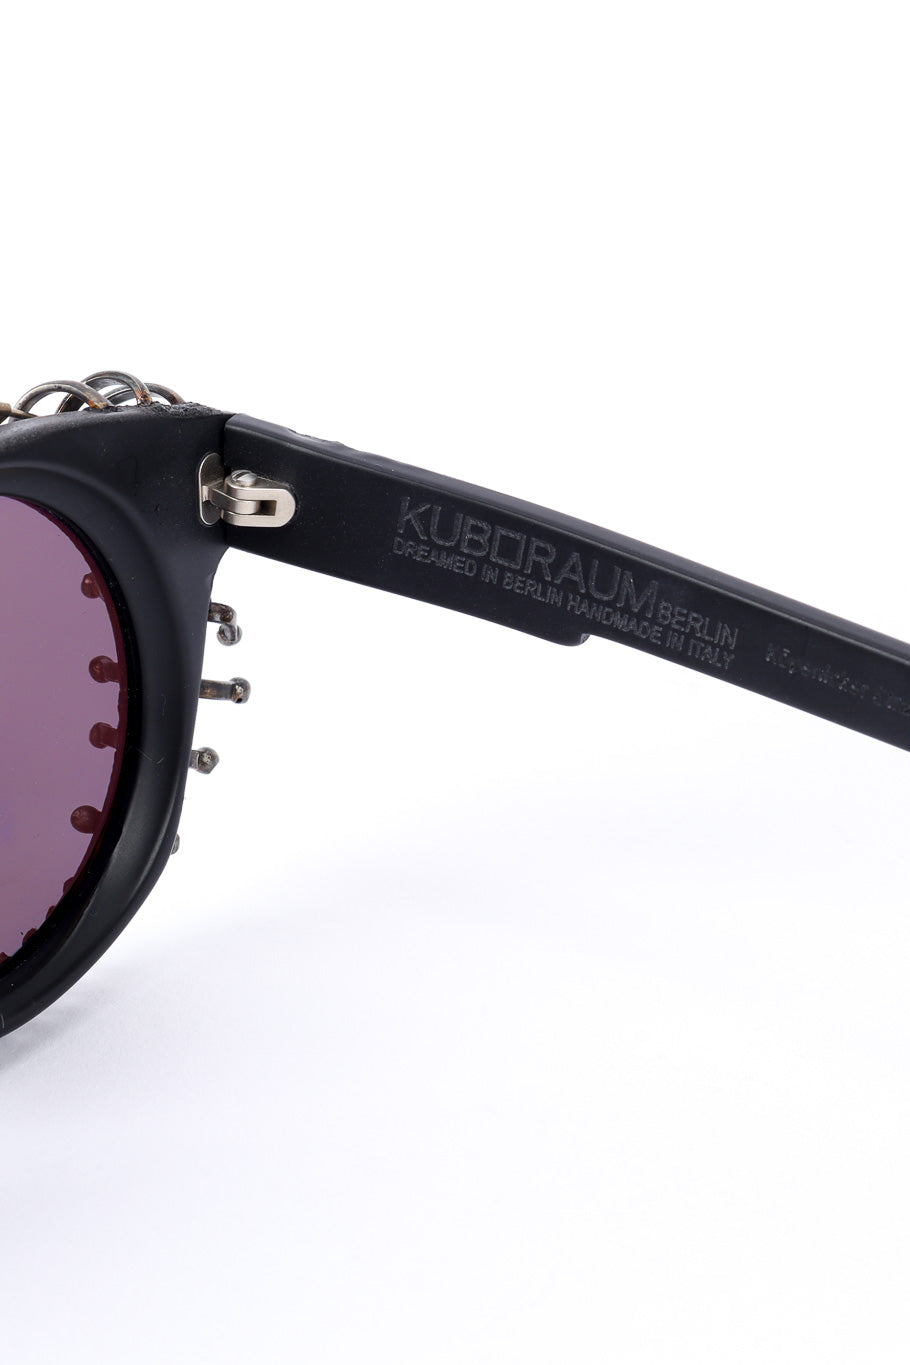 Anarchy sunglasses by Kuboraum on white background inside arm signature close @recessla